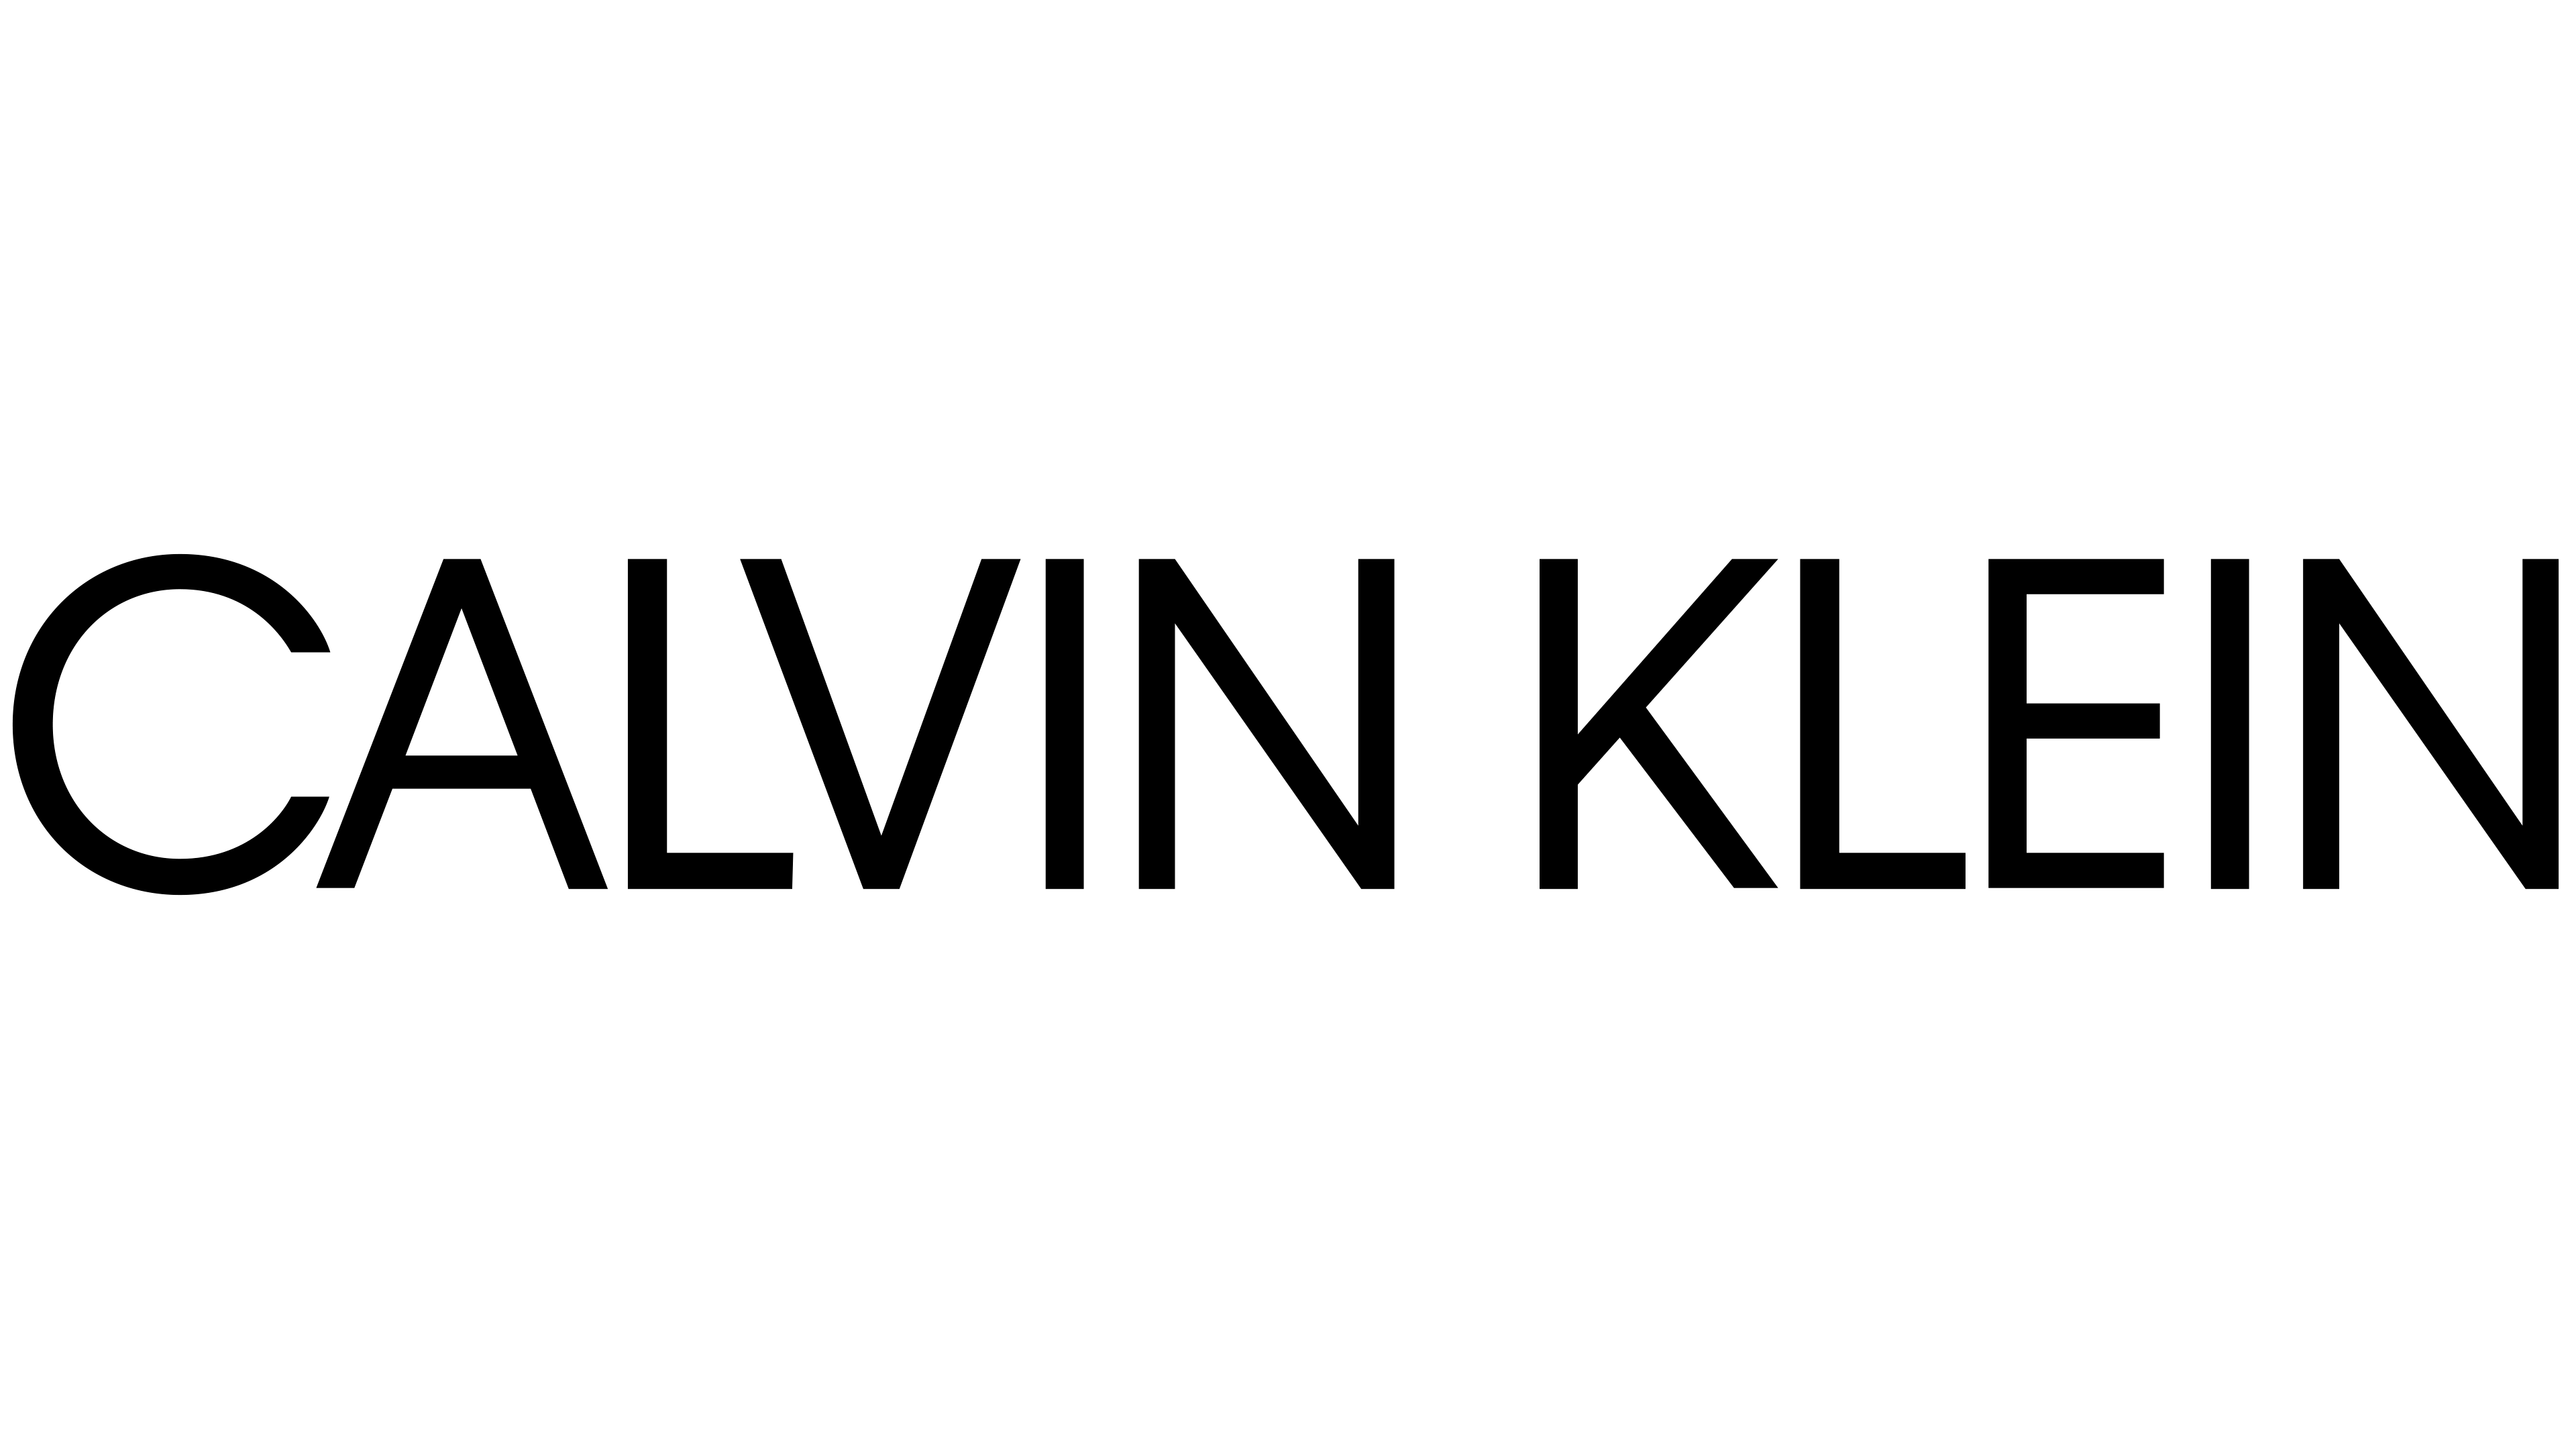 CALVIN KLEIN man - Chenzo